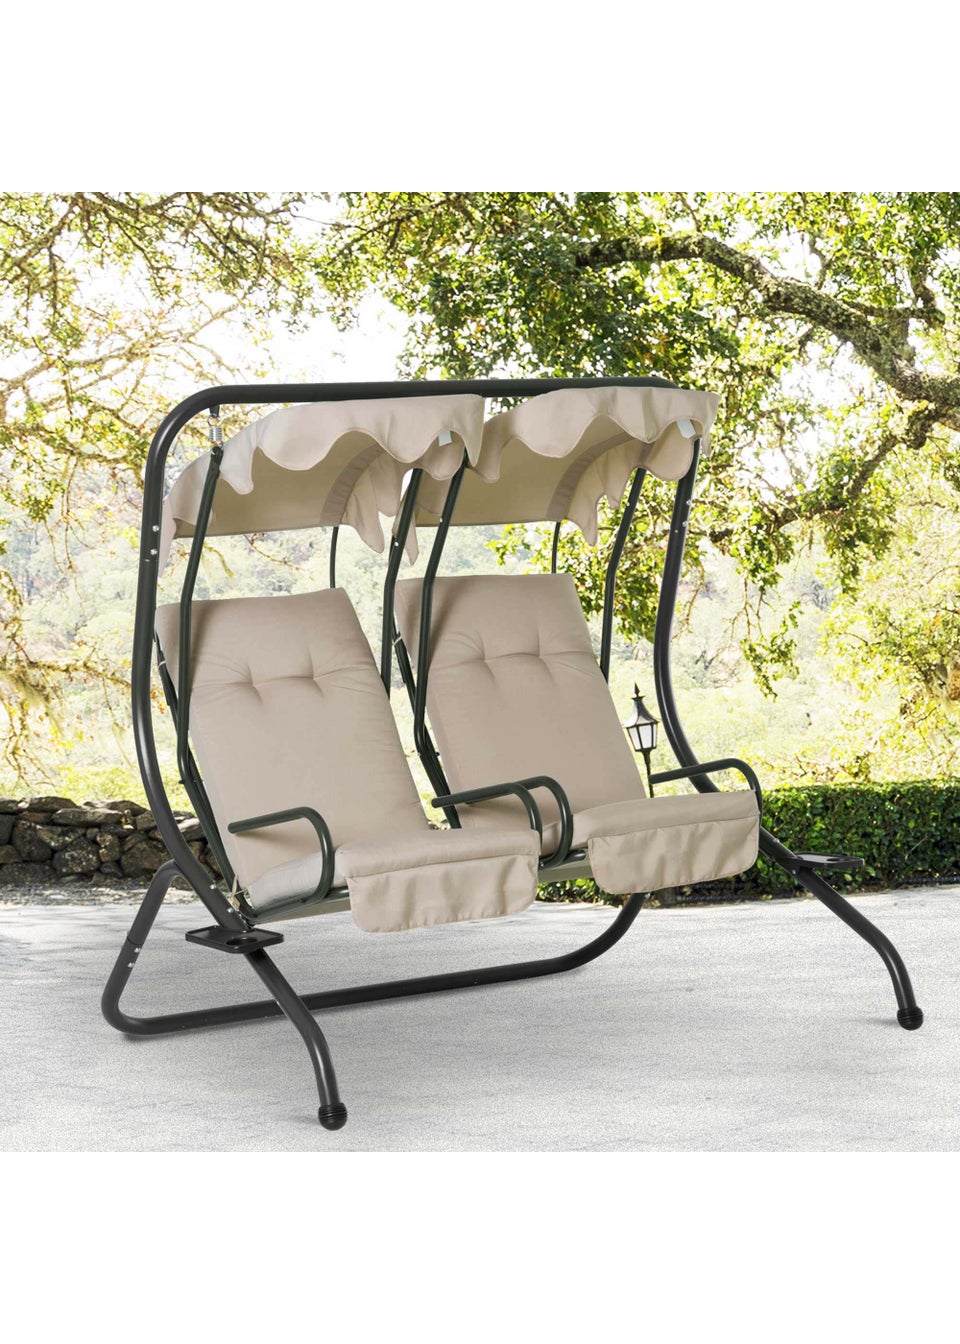 Outsunny 2 Seater Garden Swing Chair (170cm x 136cm x 170cm)